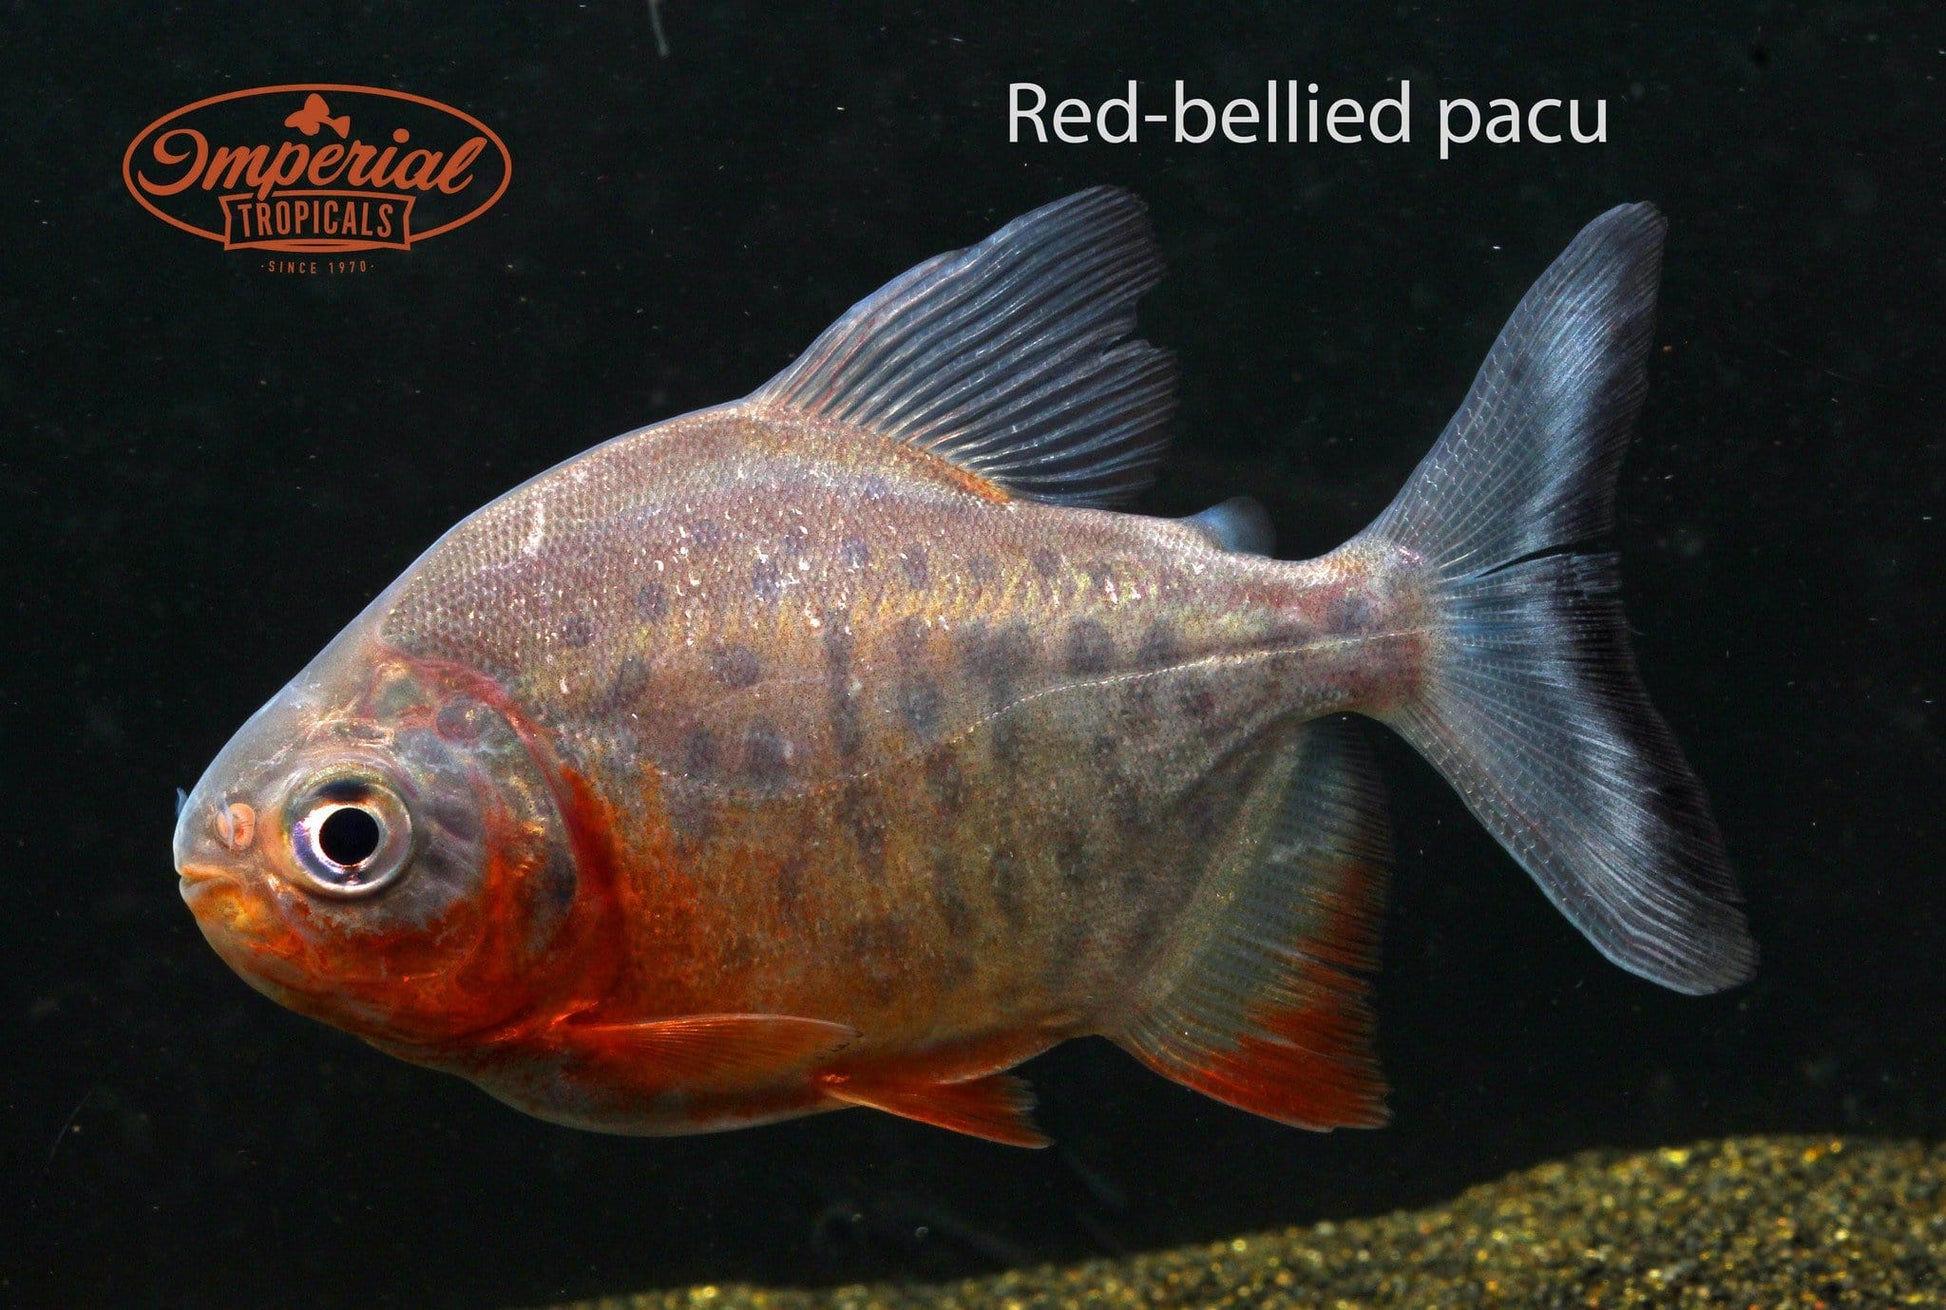 Red Bellied Pacu (Piaractus brachypomus) - Imperial Tropicals